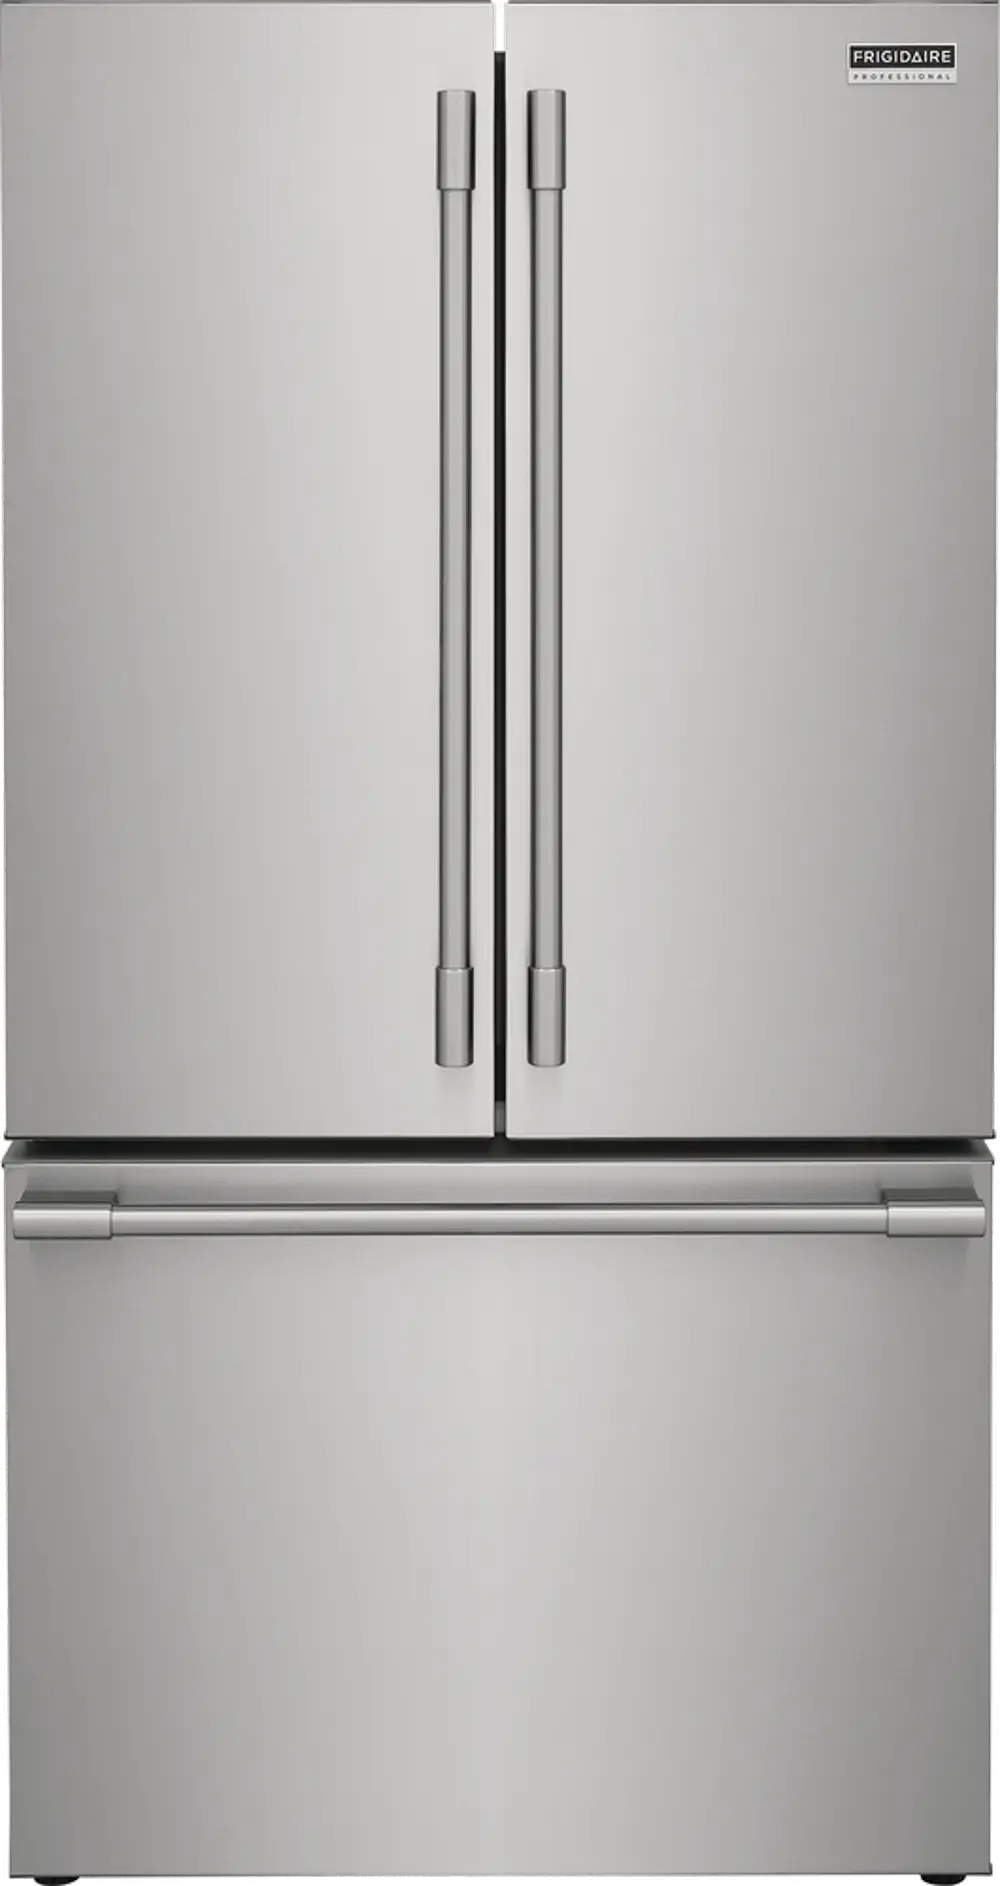 Frigidaire Professional Refrigerator PRFG2383AF | RC Willey